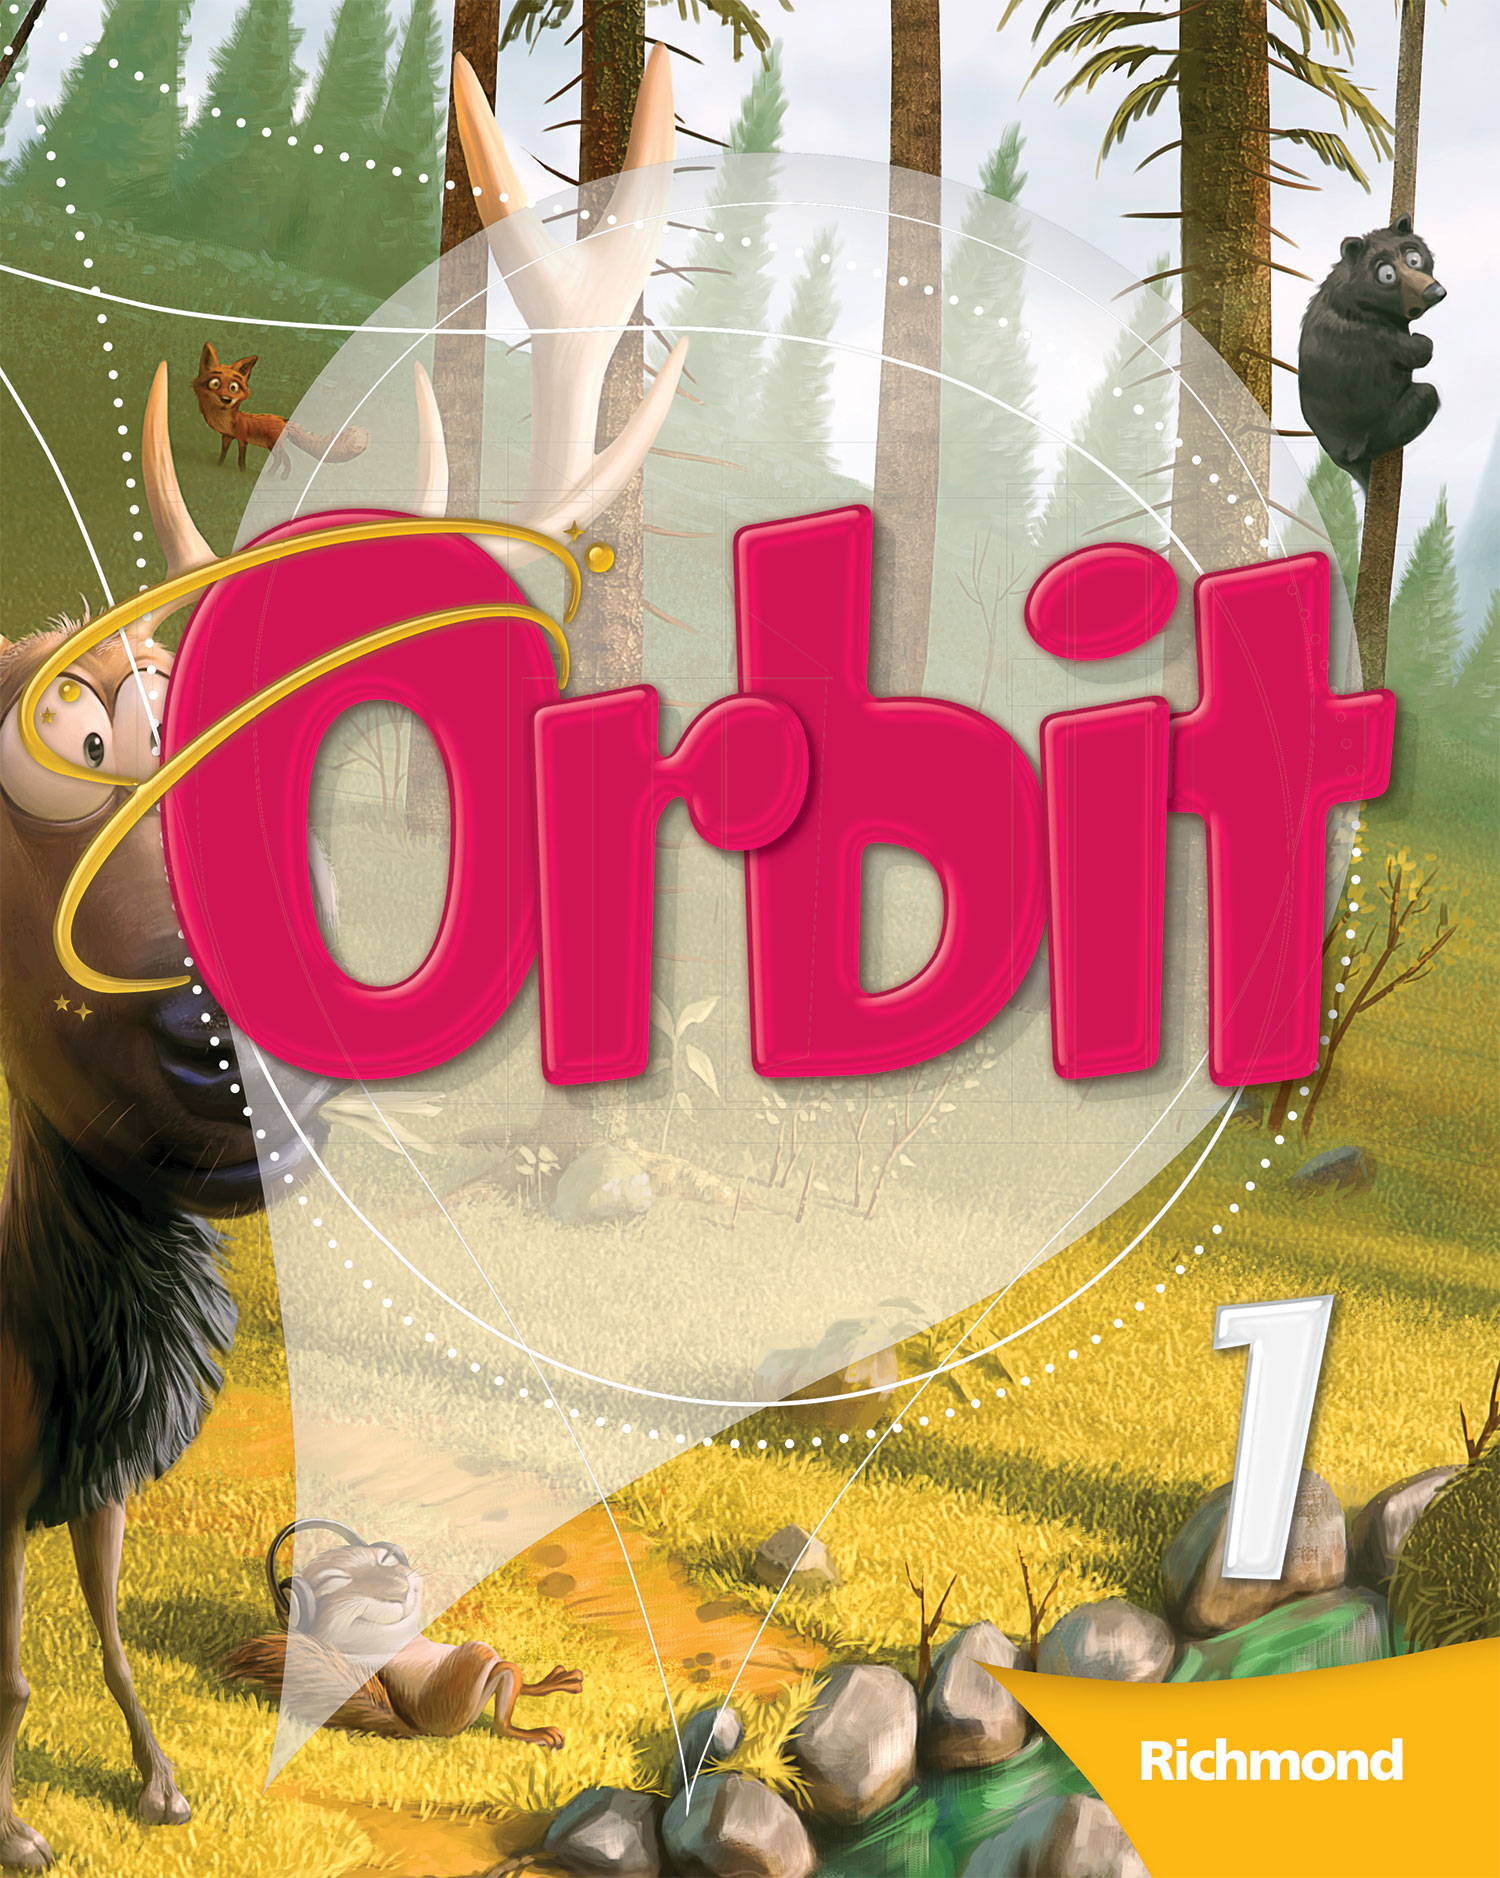 Capa do livro de inglês Orbit